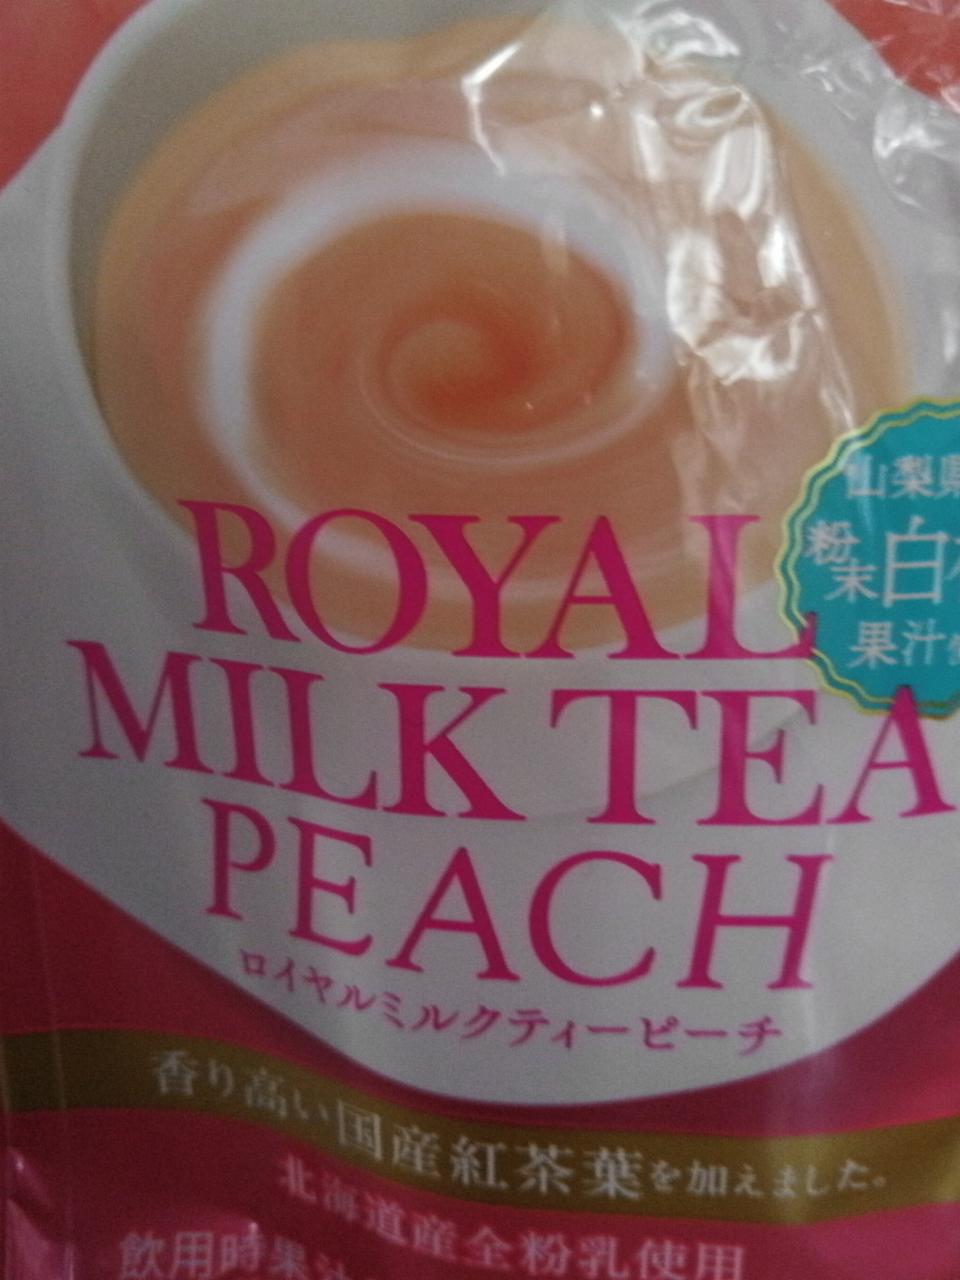 Fotografie - Royal milk tea peach